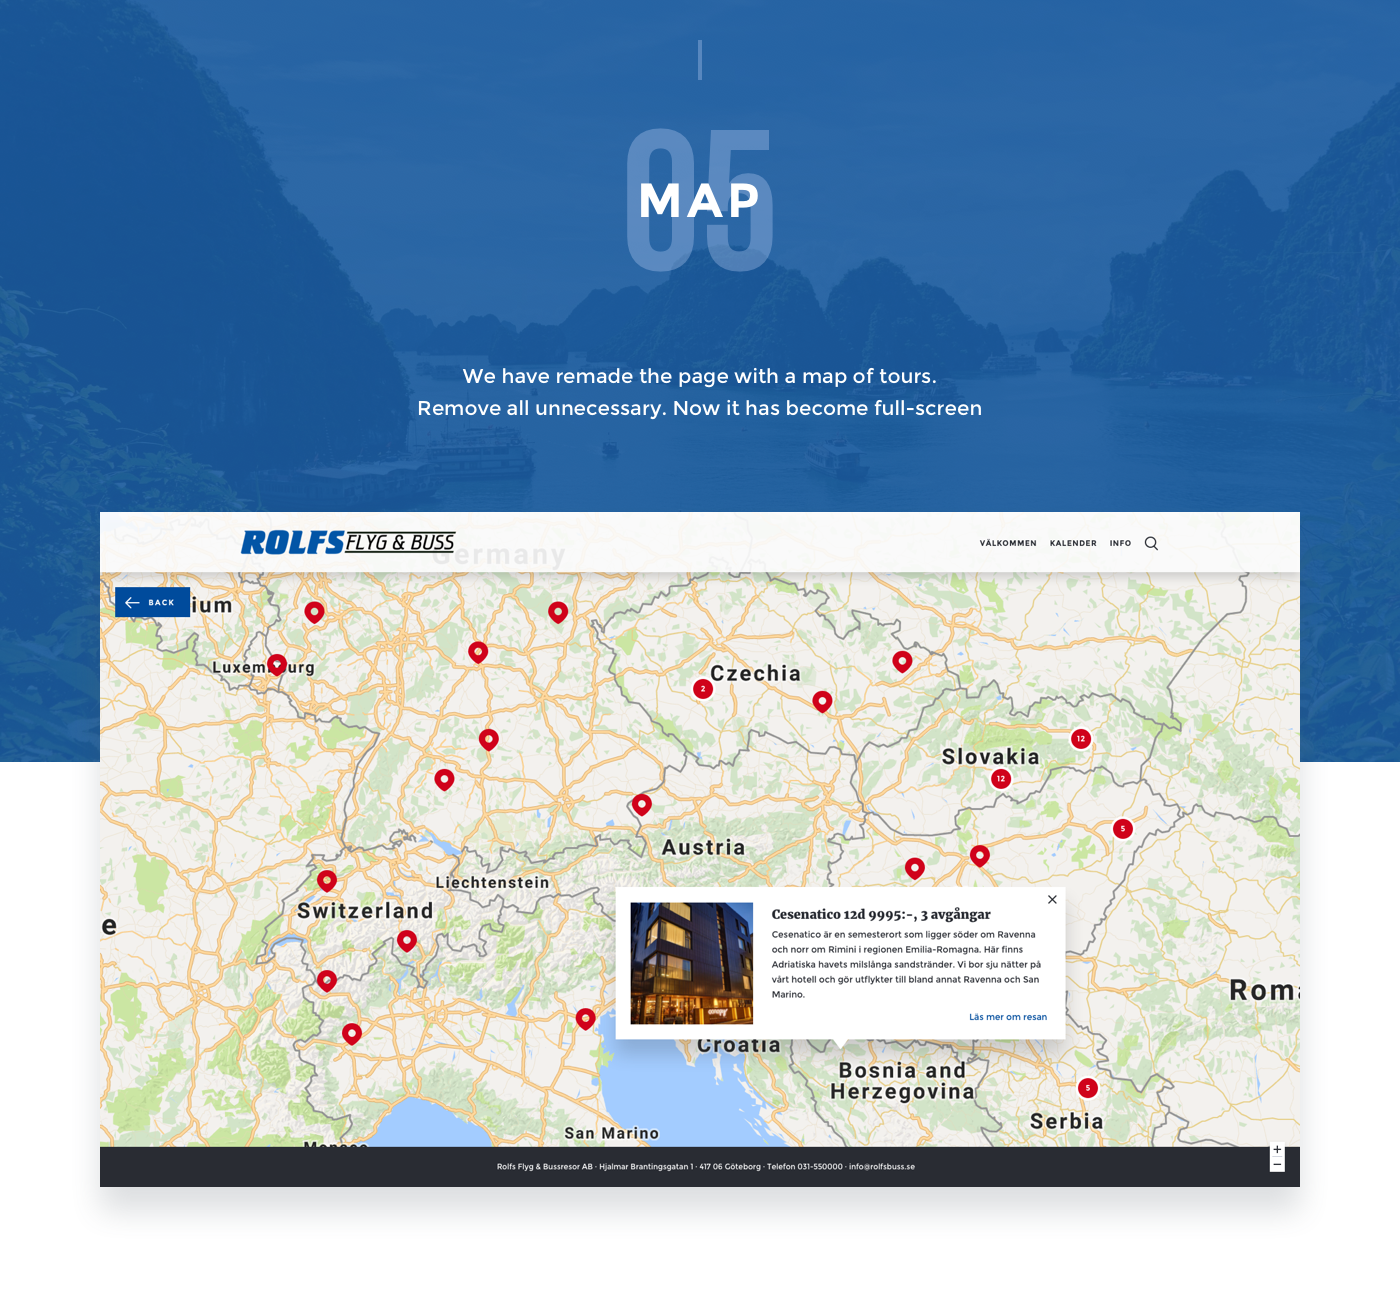 Web design Travel tour Booking modern redesign Responsive UI ux